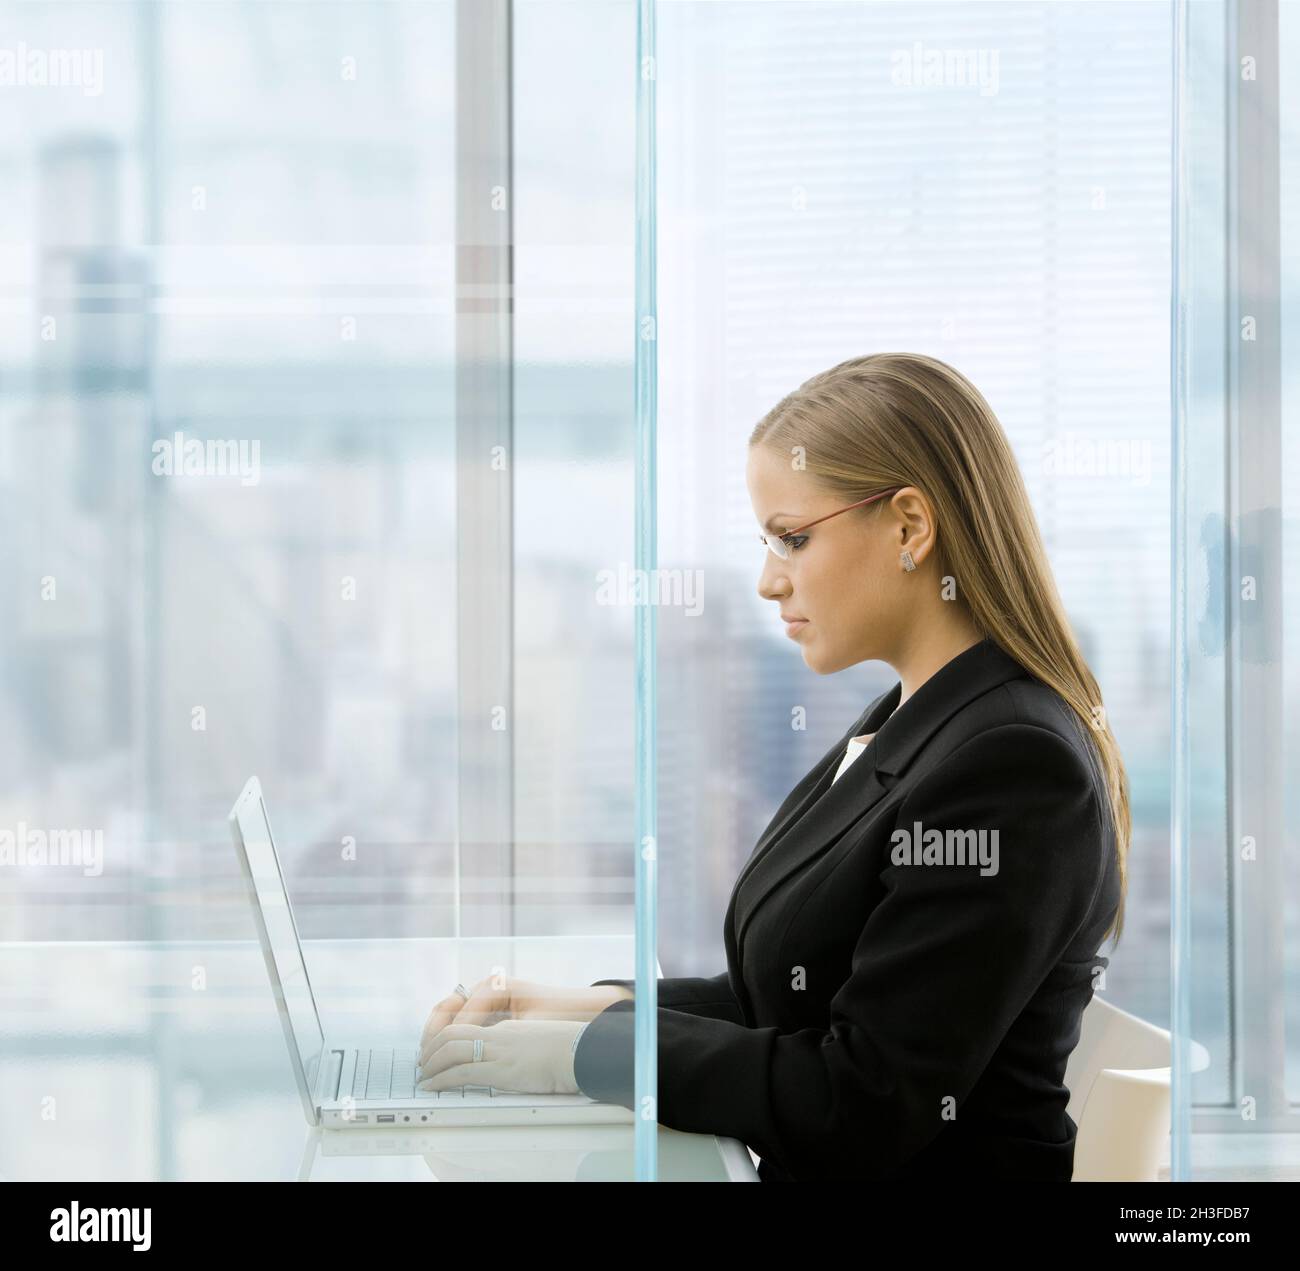 Businesswoman using laptop comouter Stock Photo